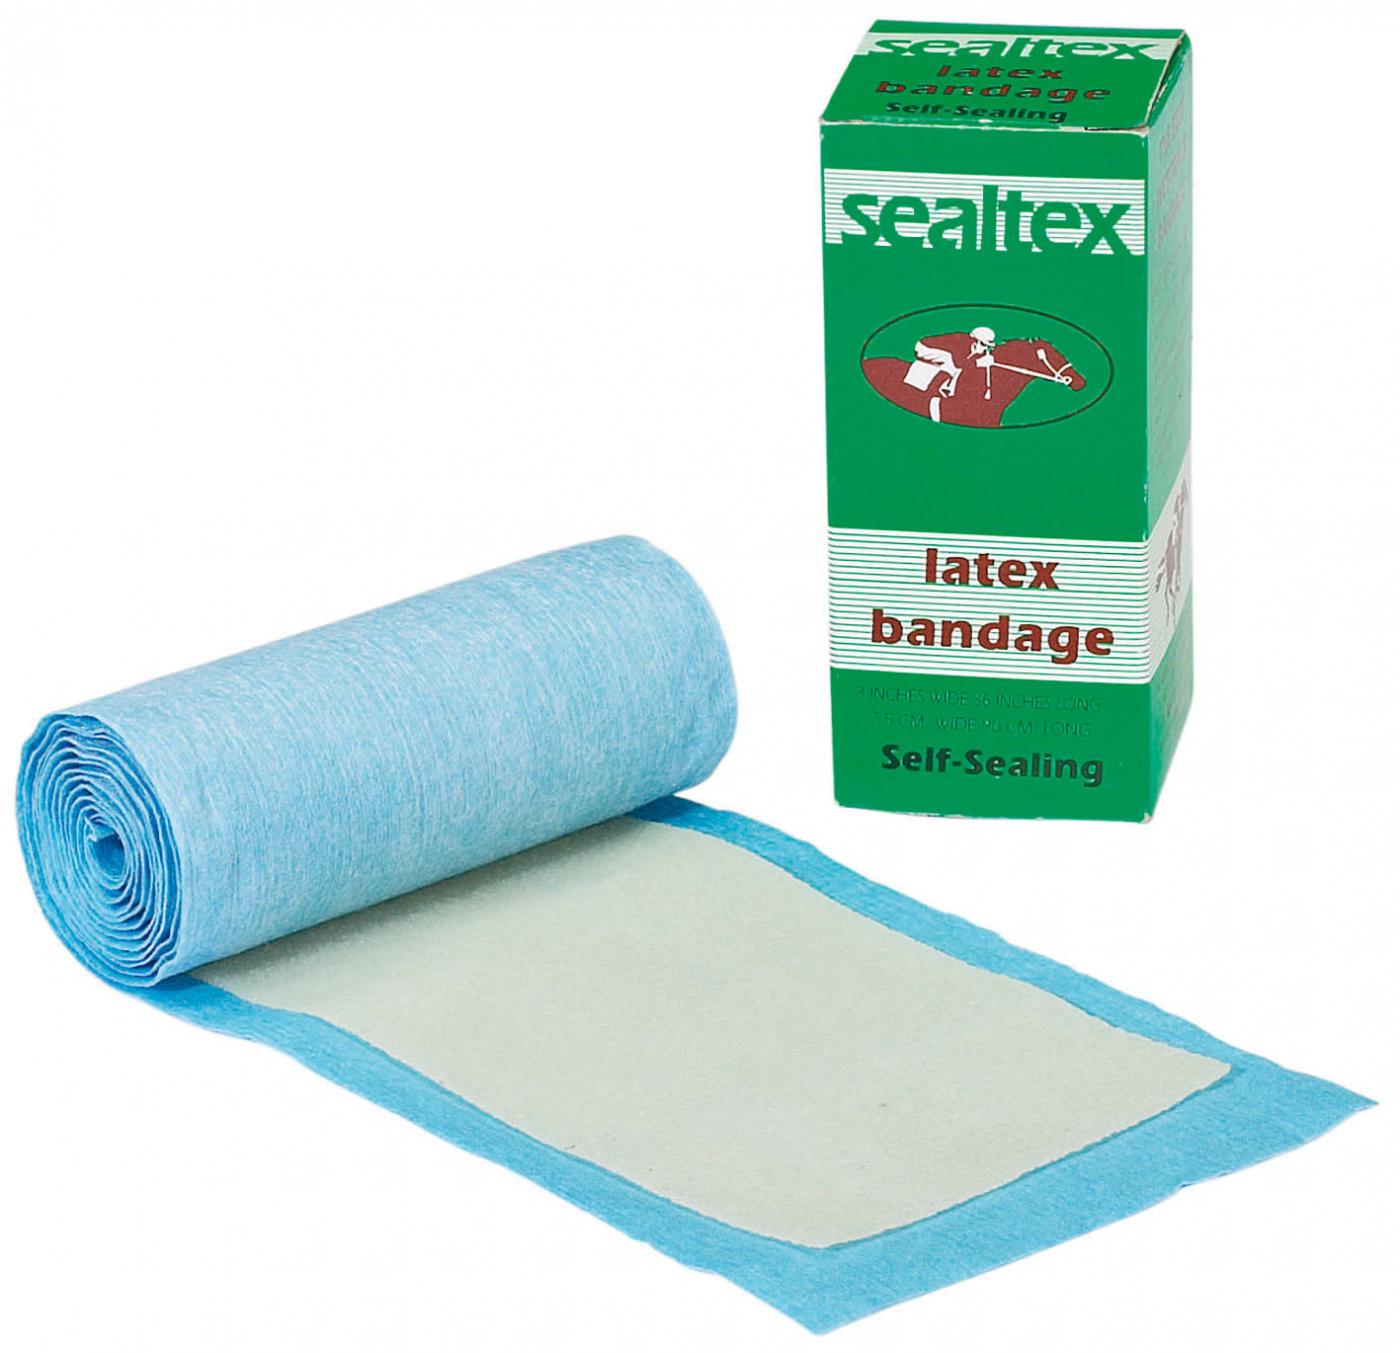 Latex Bandage Sealtex